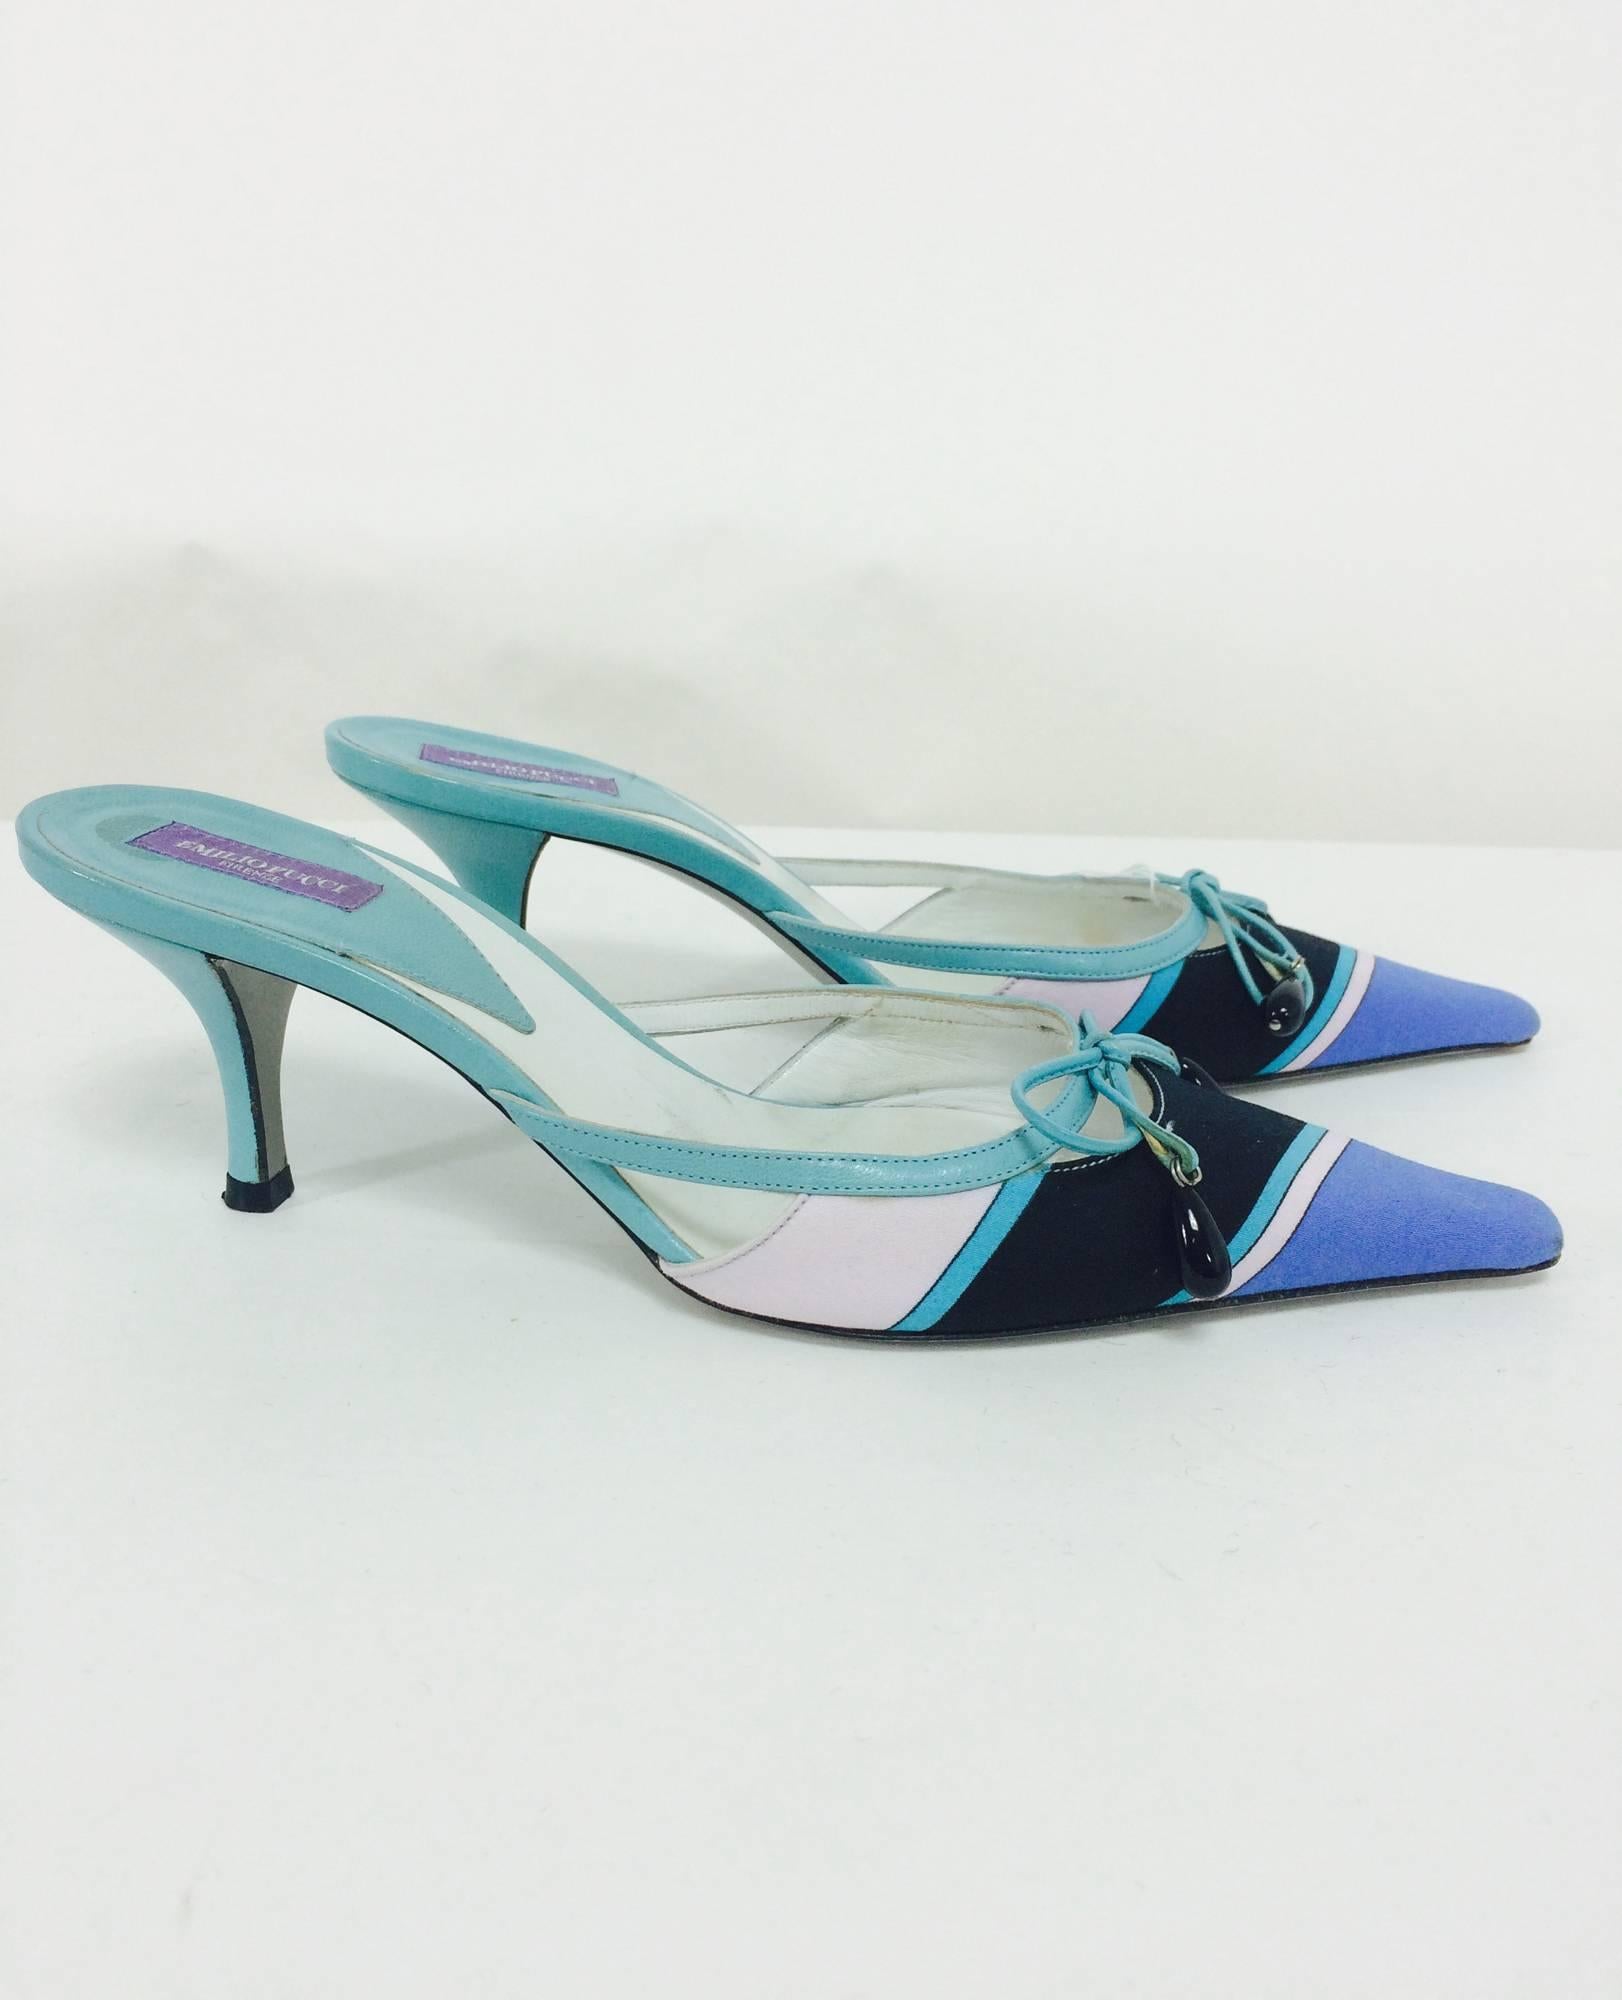 Gray Pucci blue & aqua silk print bow & bead front high heel mules 36 1/2 